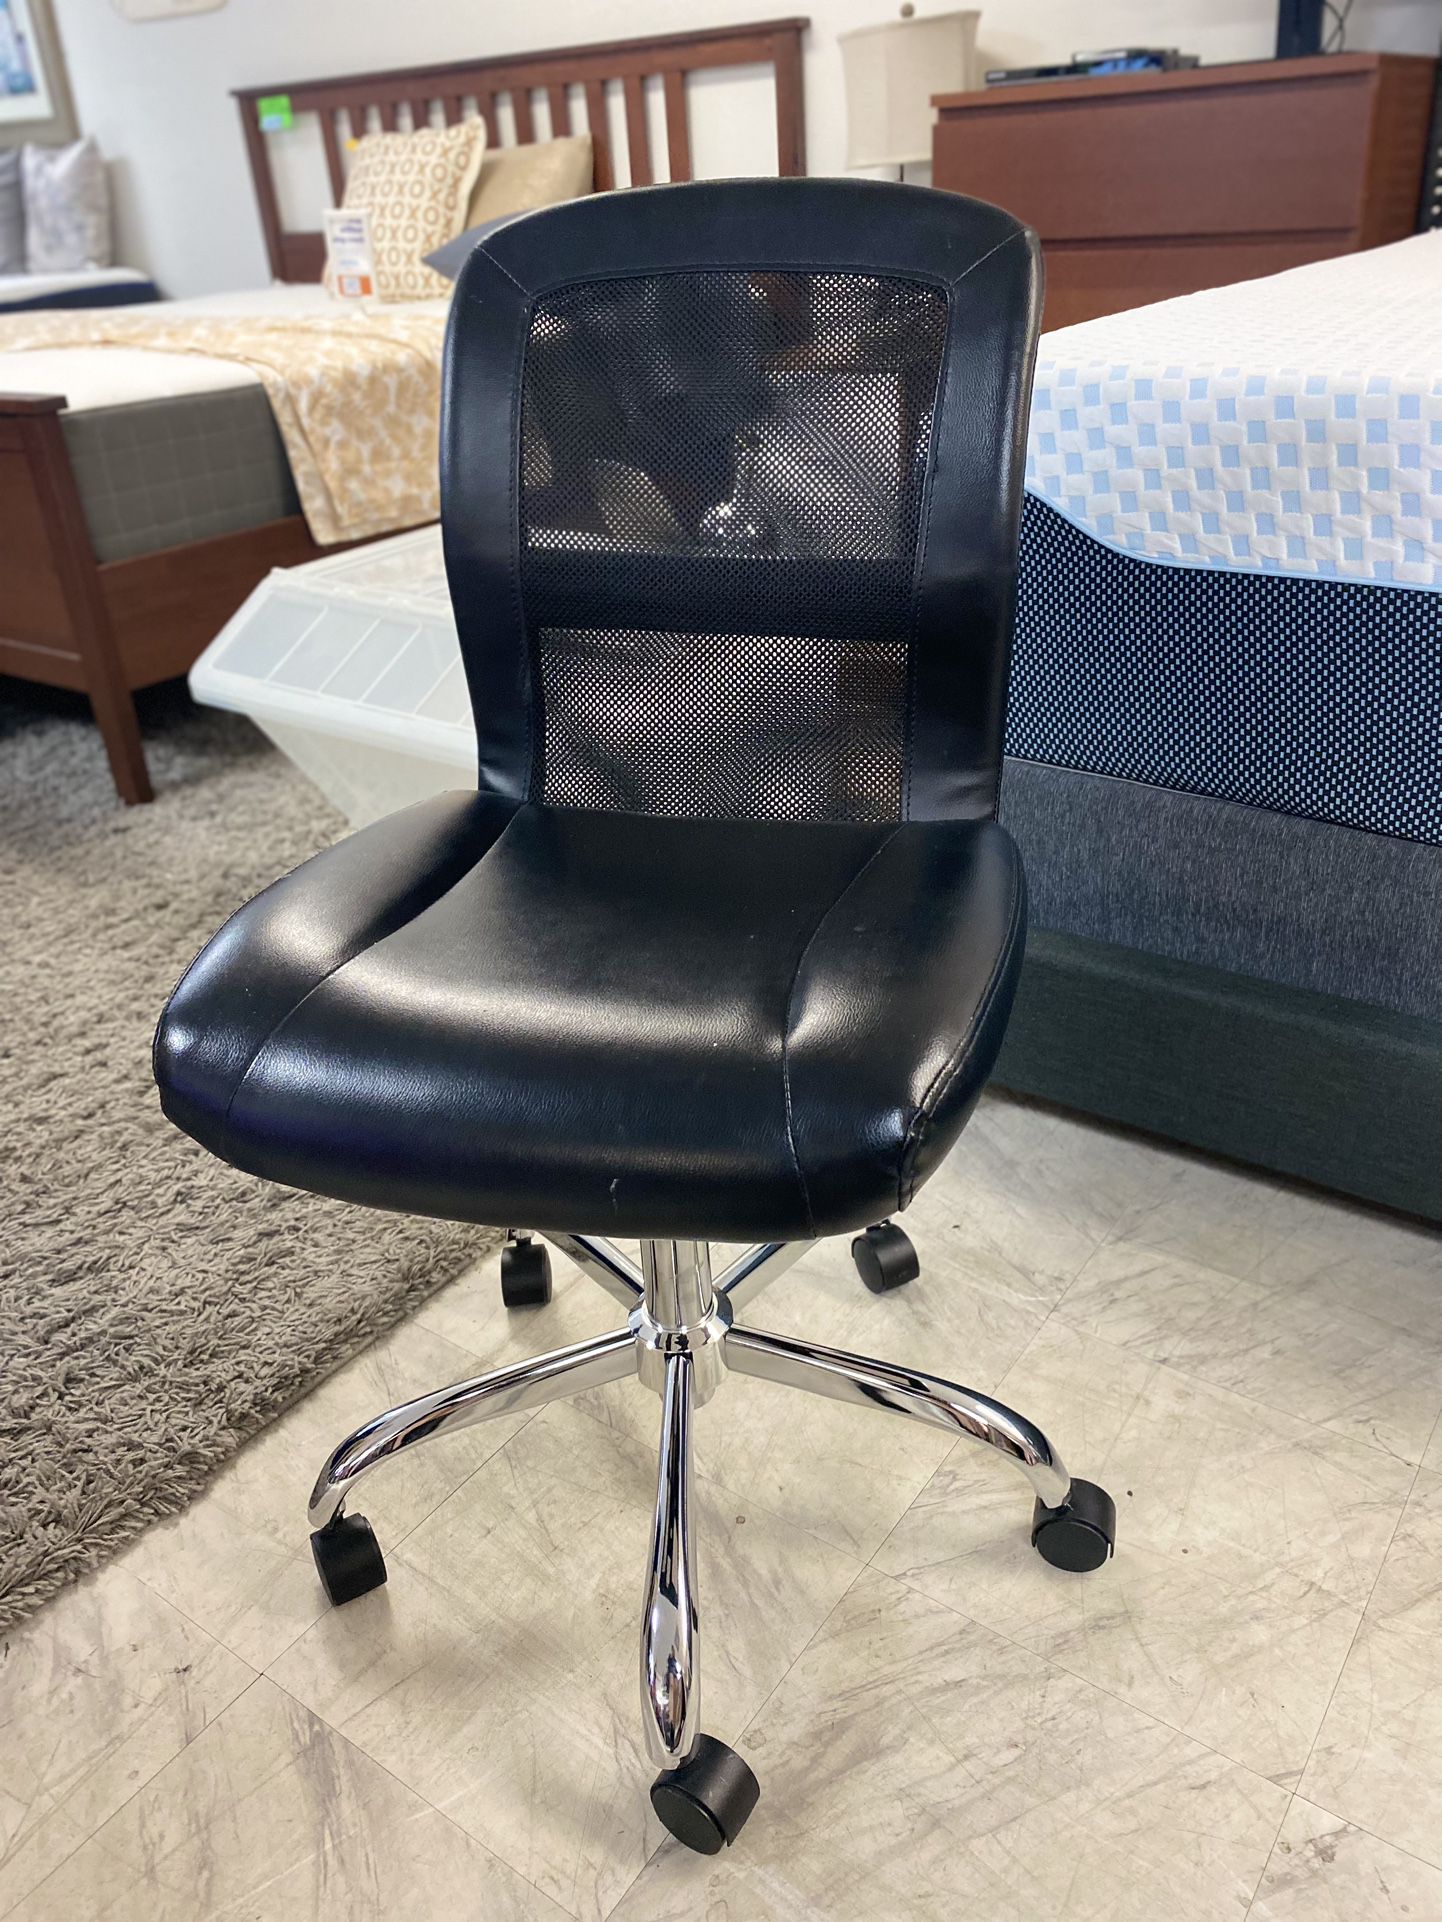 Desk Chair $29.99